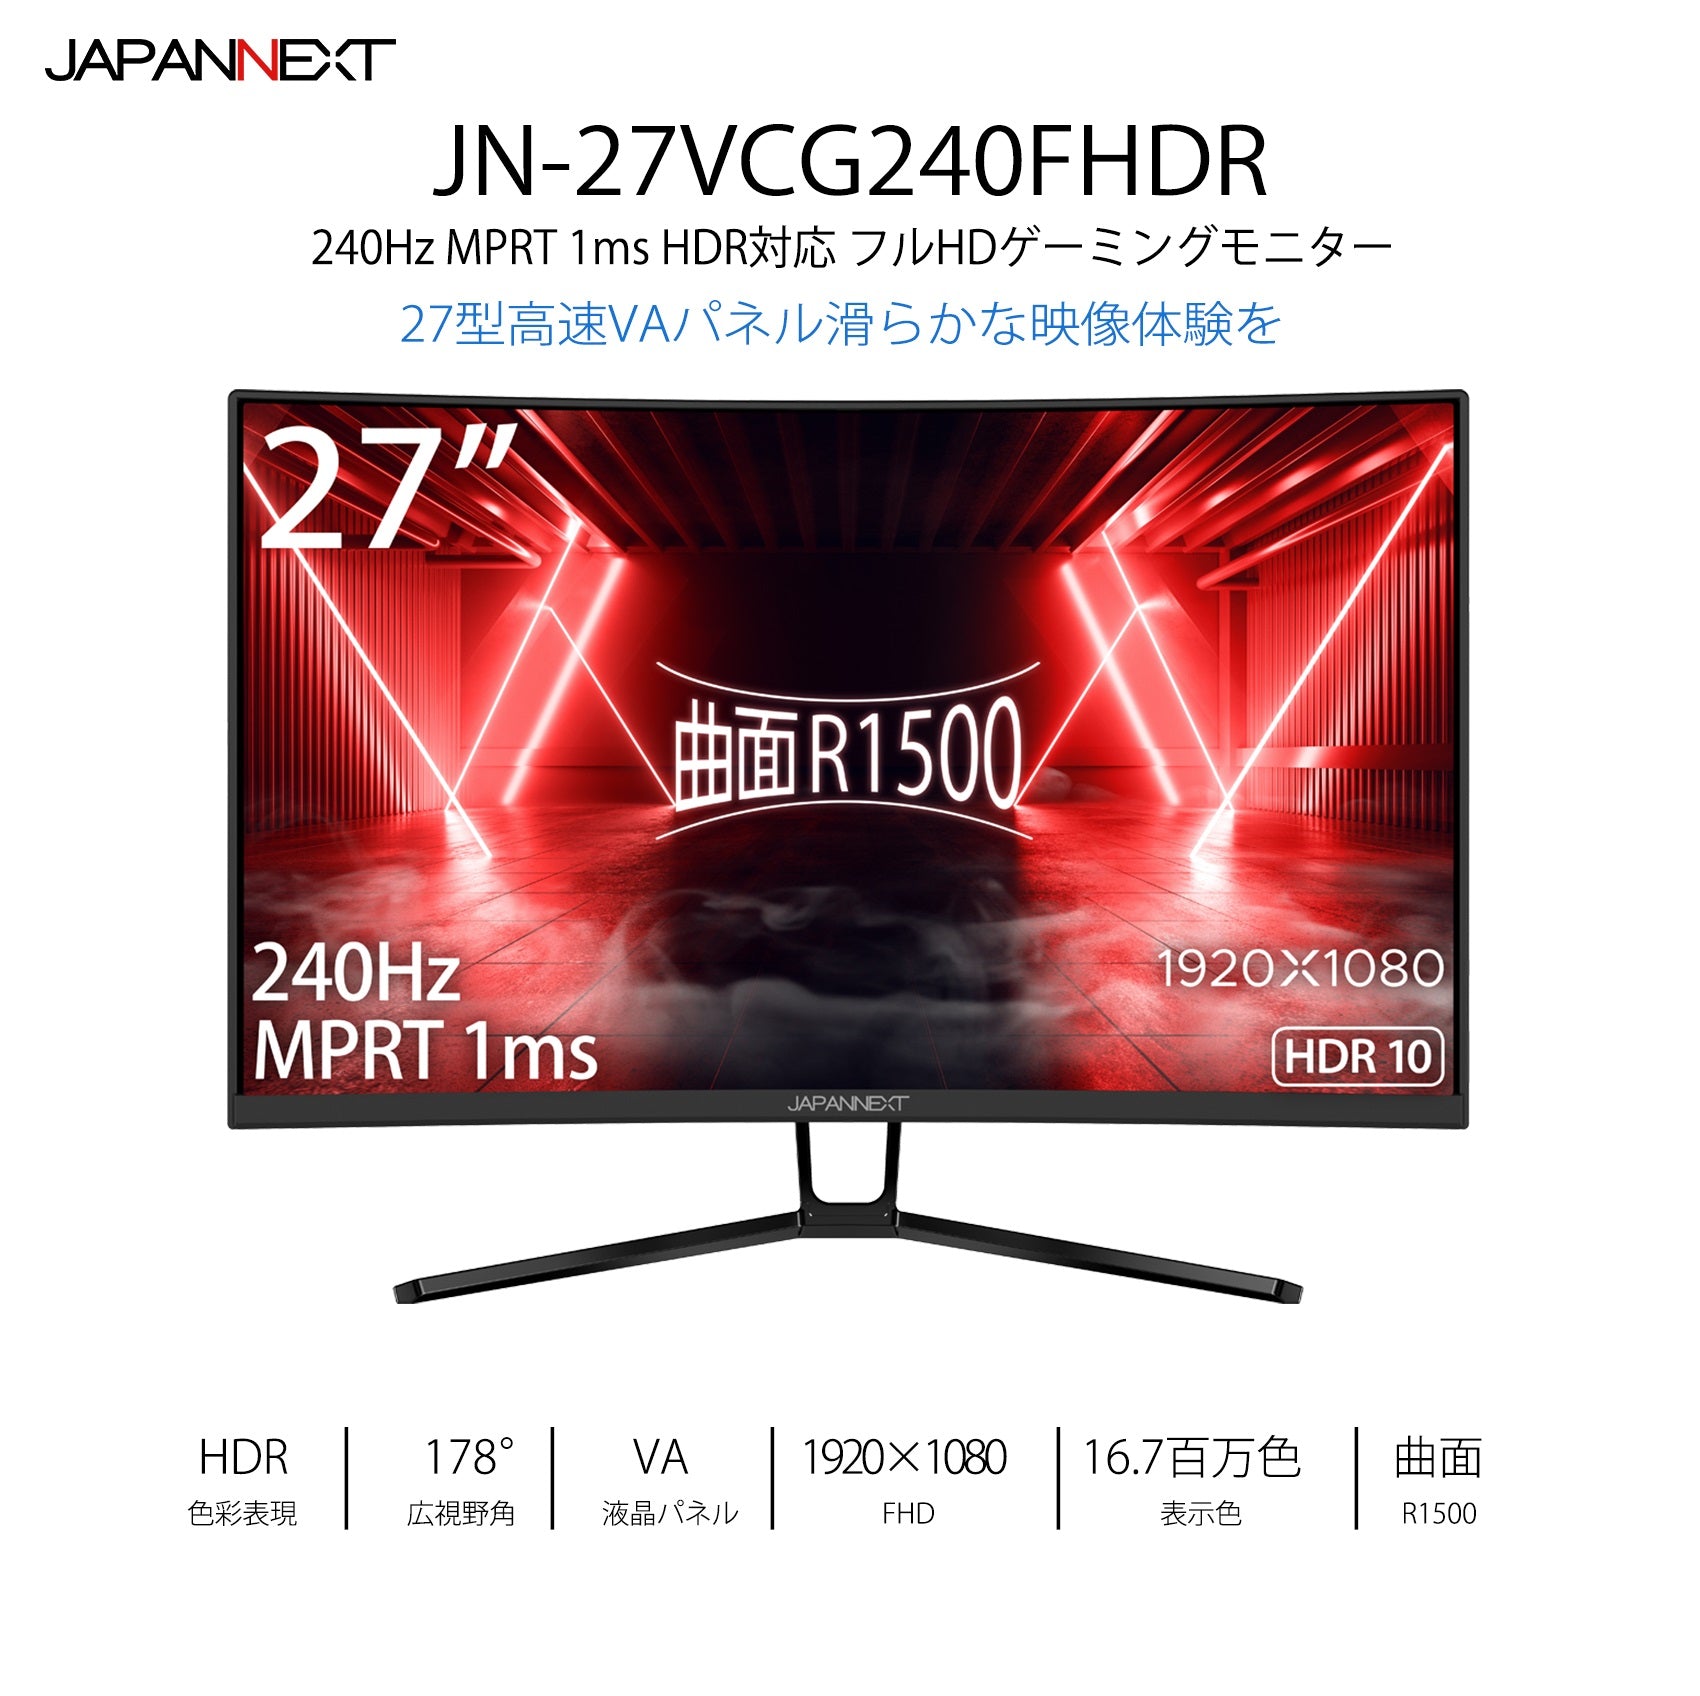 JAPANNEXT 27インチ 曲面 Full HD(1920 x 1080) 240Hz 液晶モニター JN ...